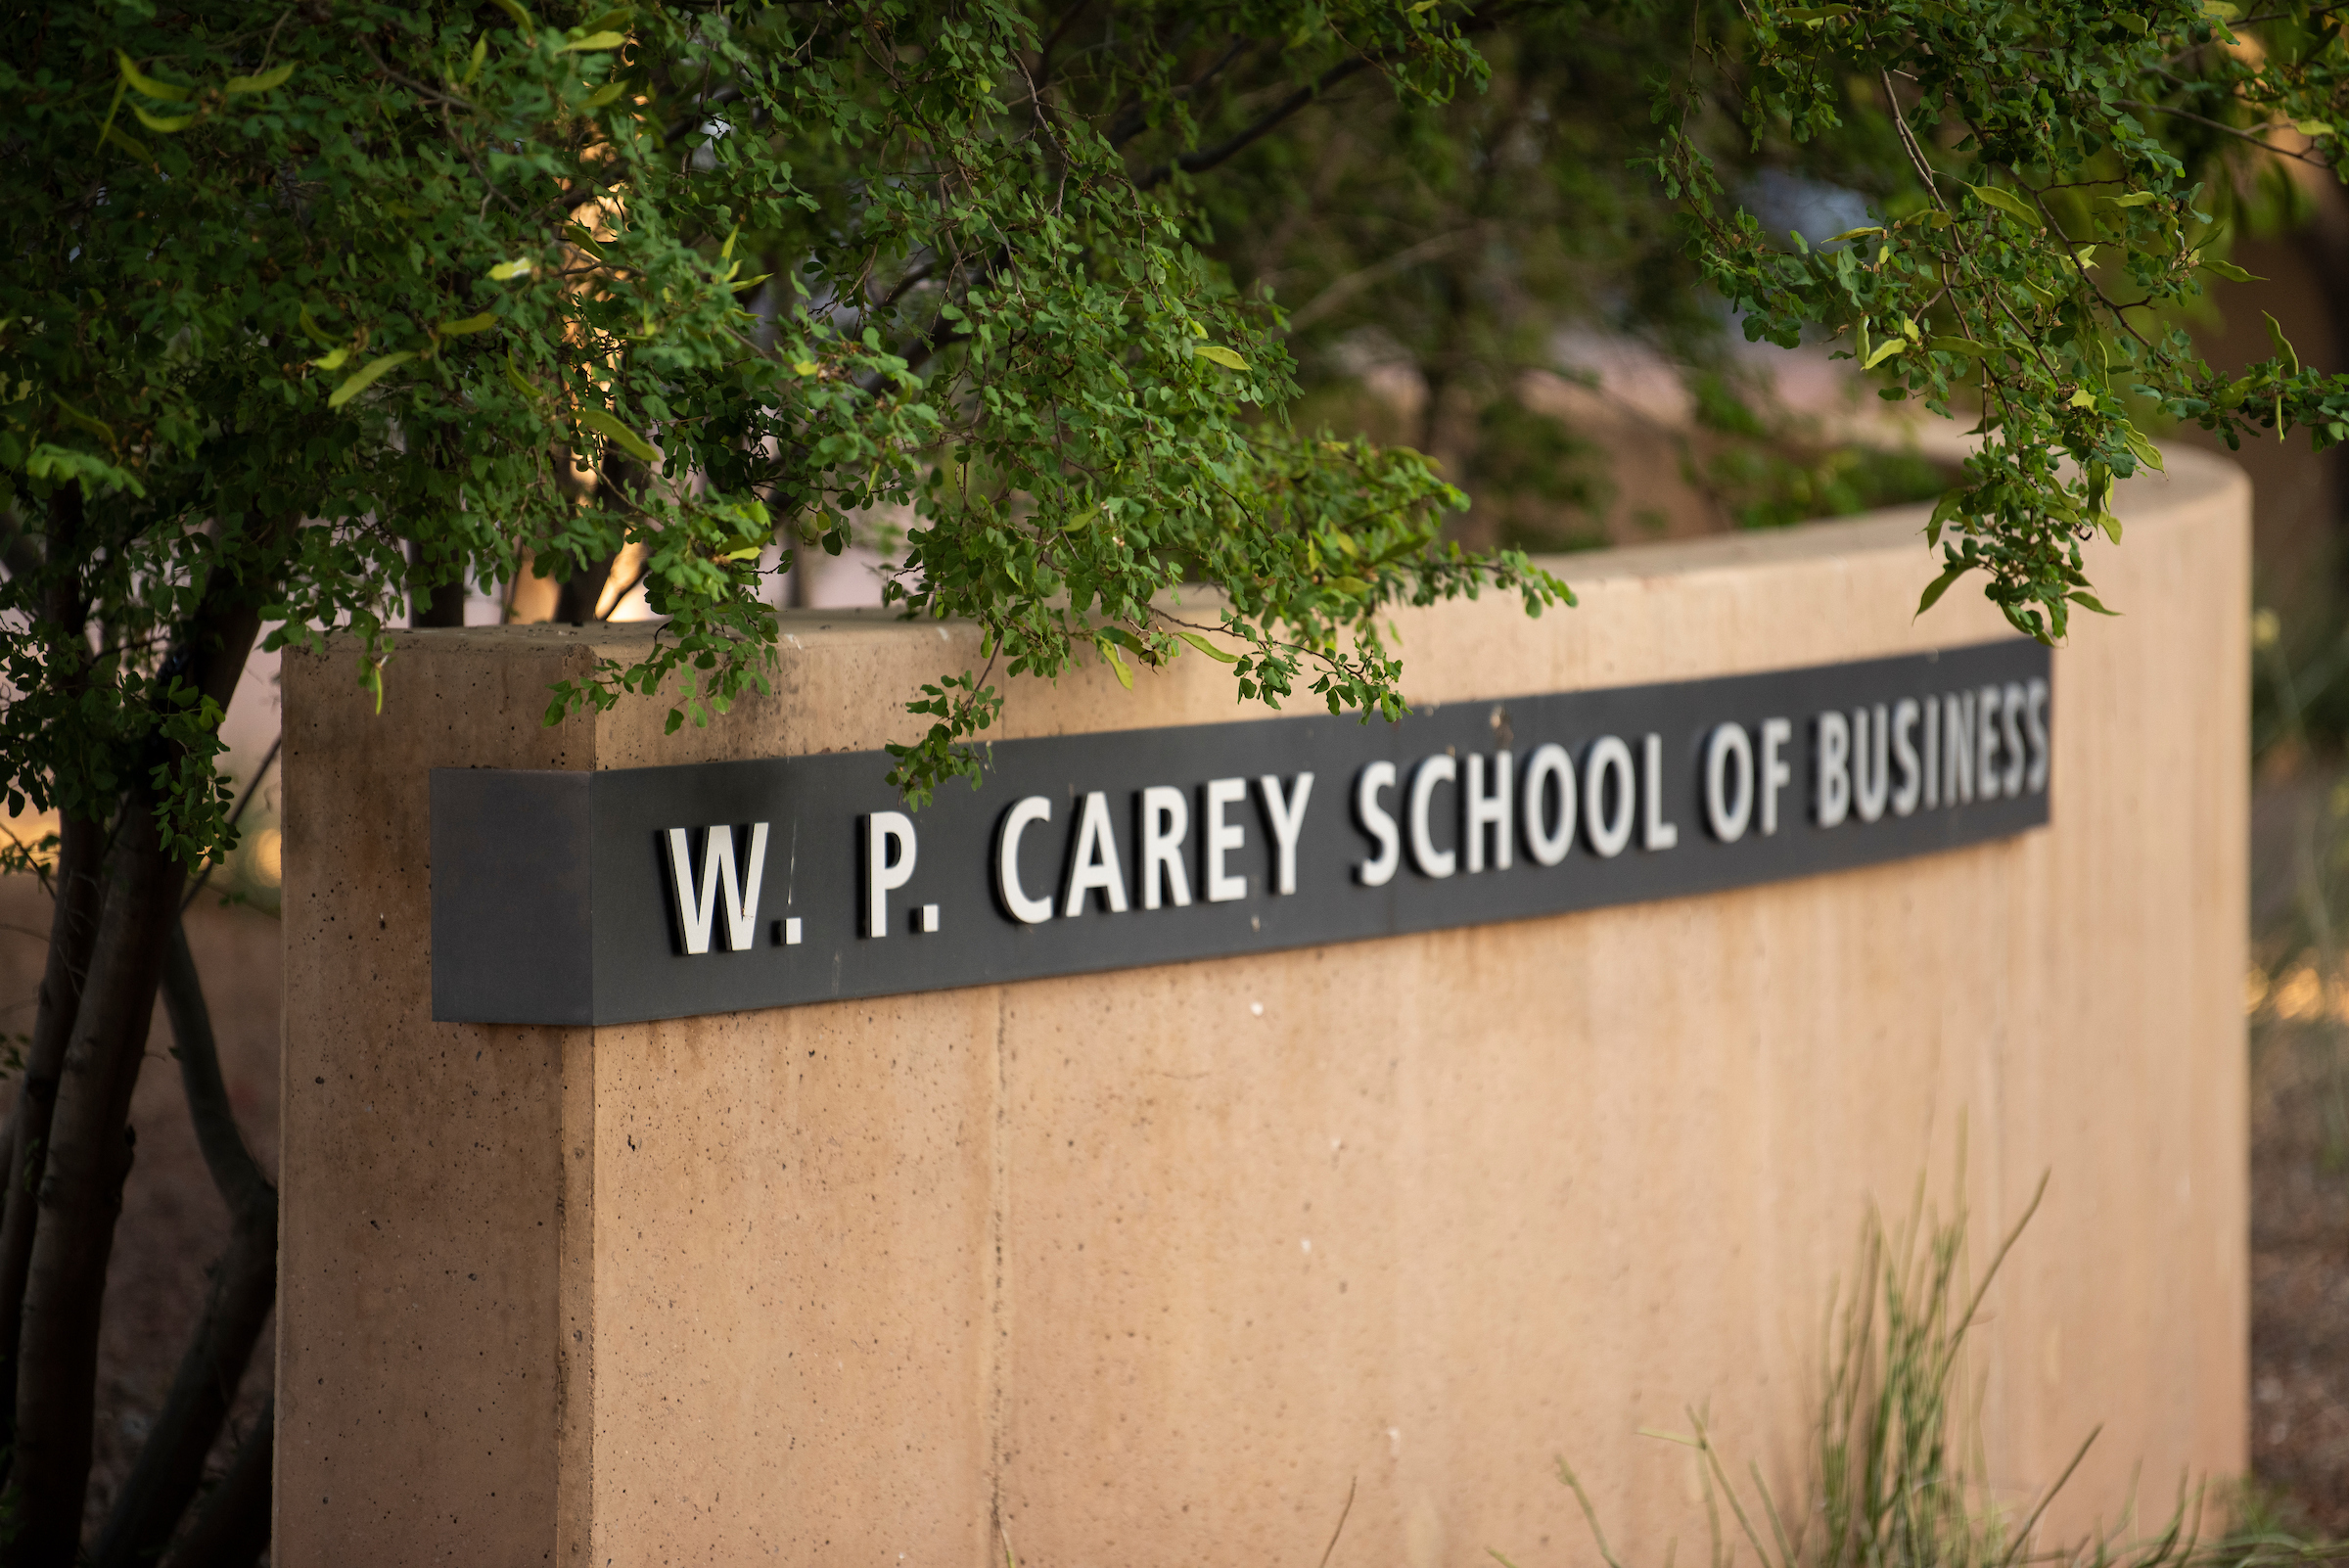 W. P. Carey School of Business